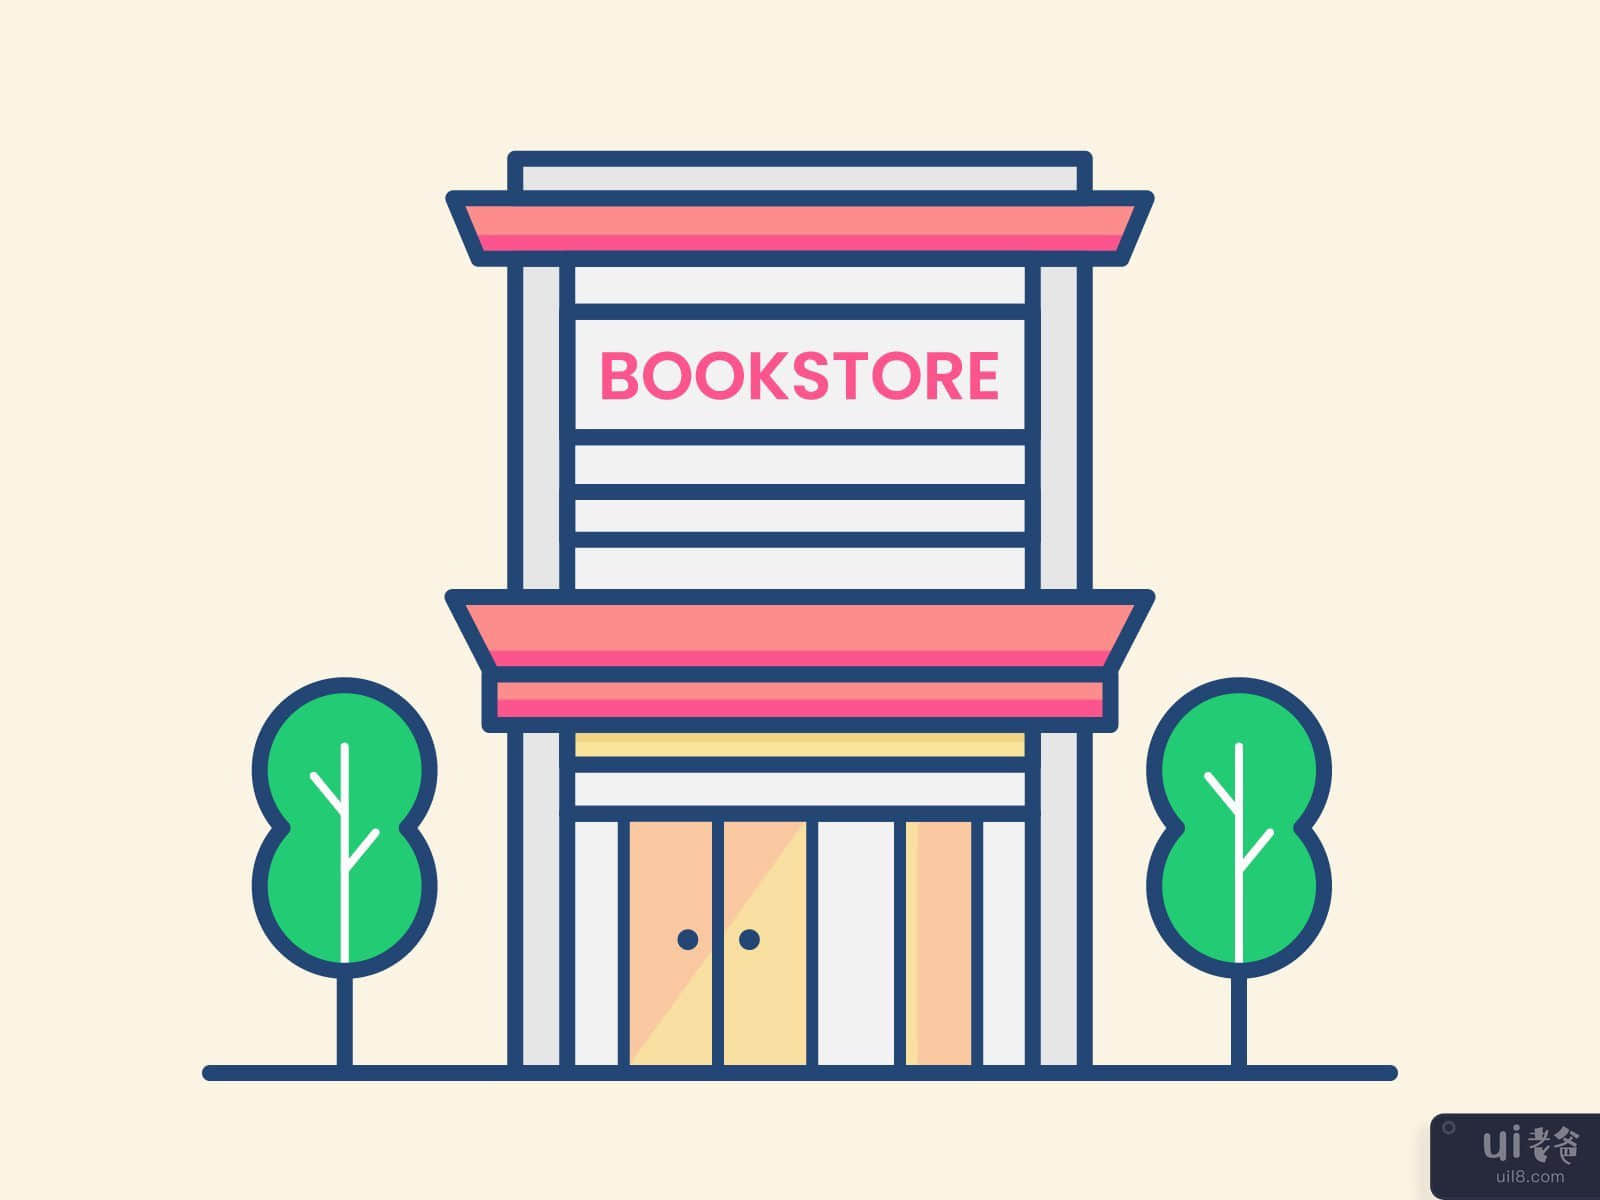 Bookstore illustration